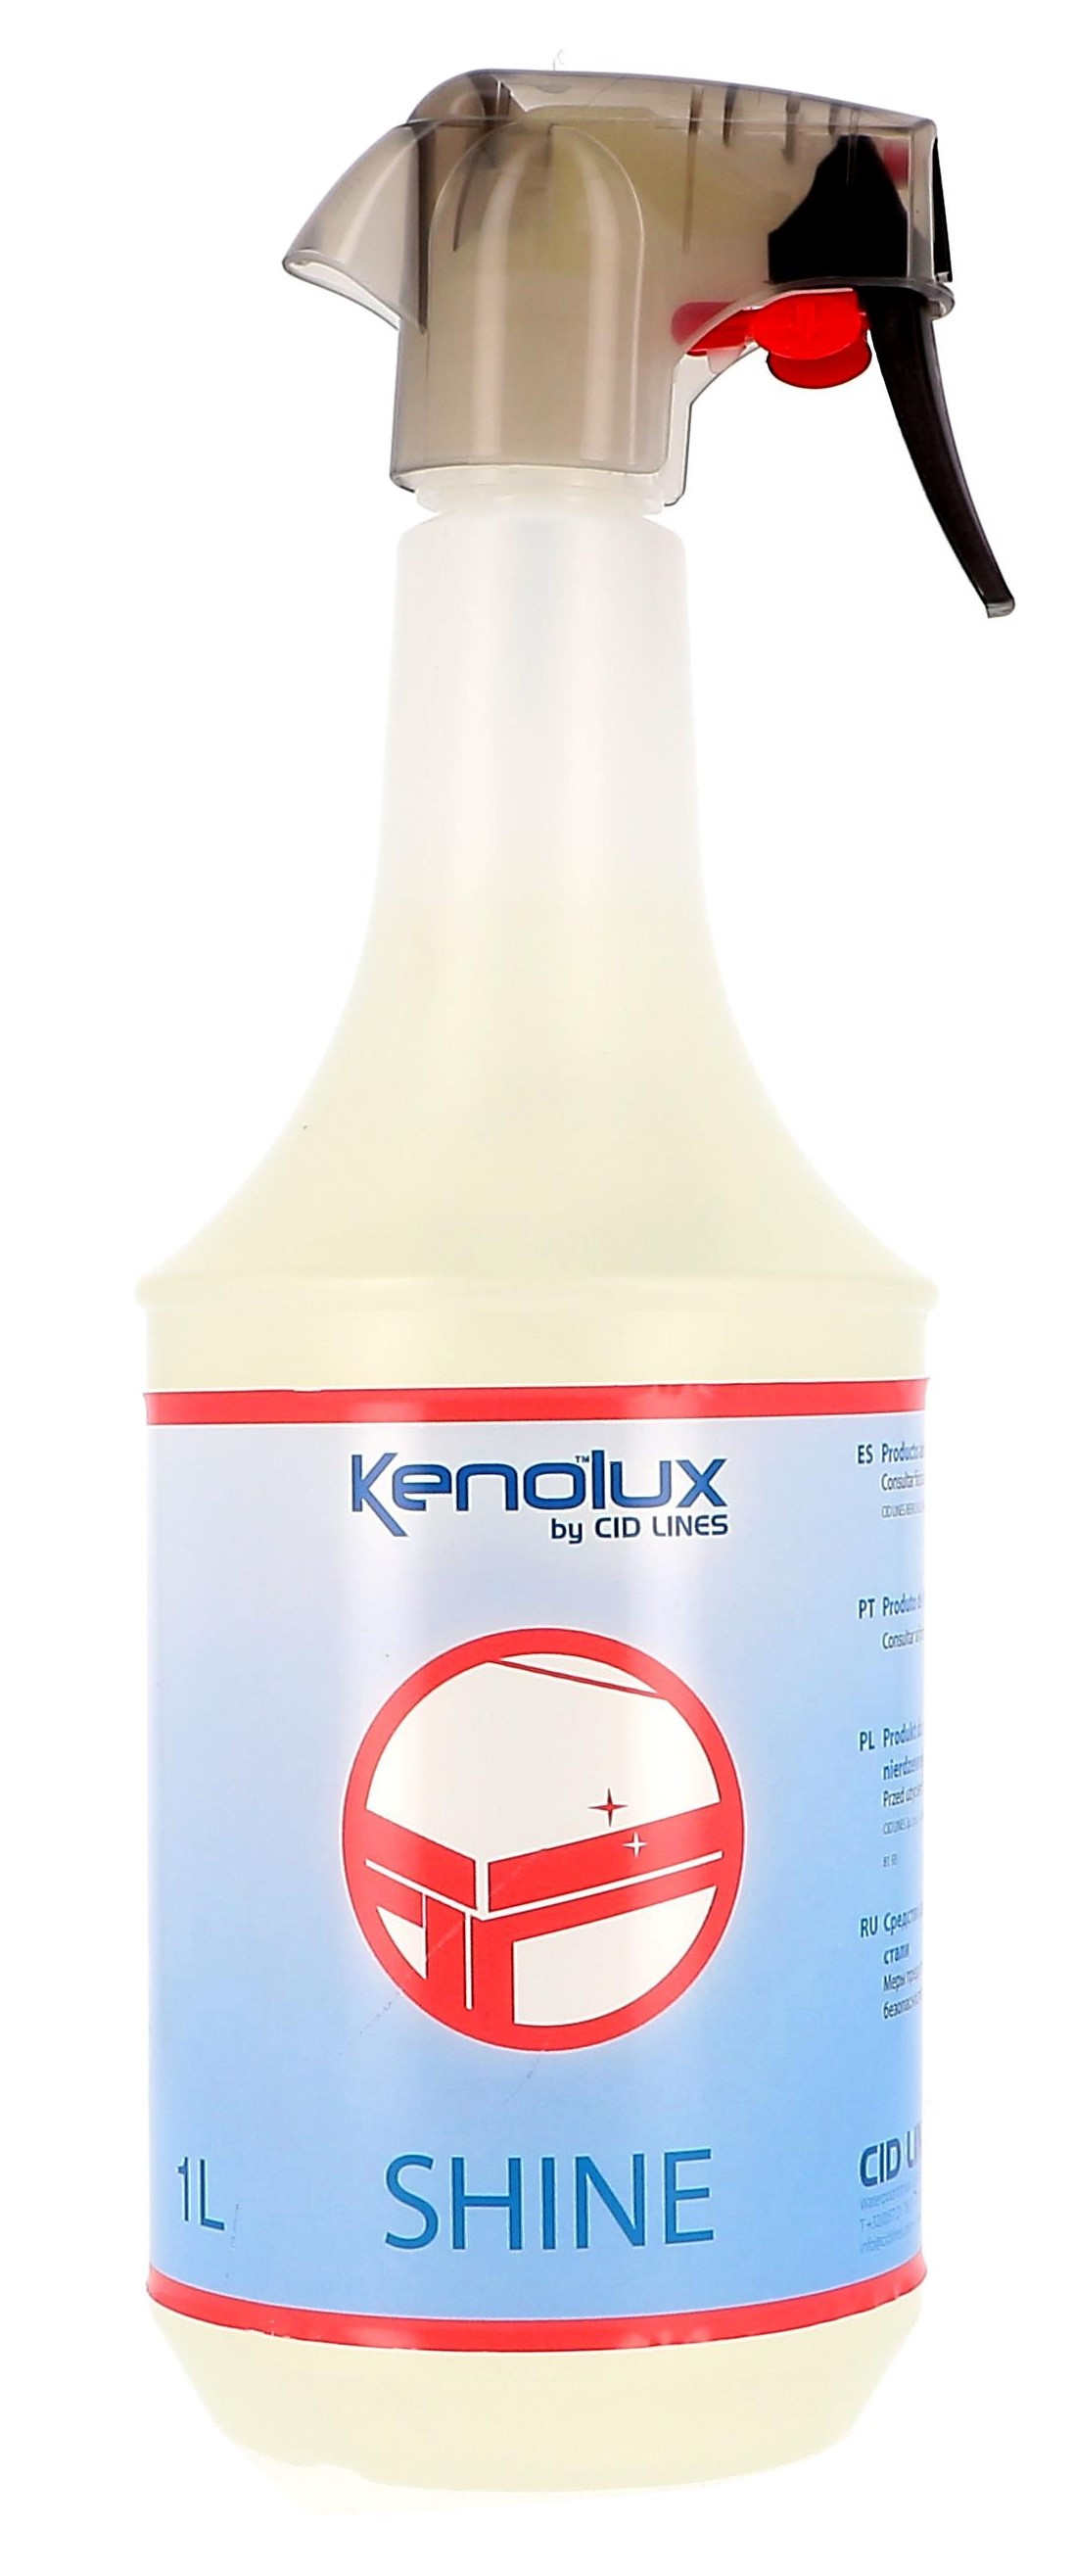 Kenolux Shine 1L Cid Lines inox reiniger (Reinigings-&kuisproducten)